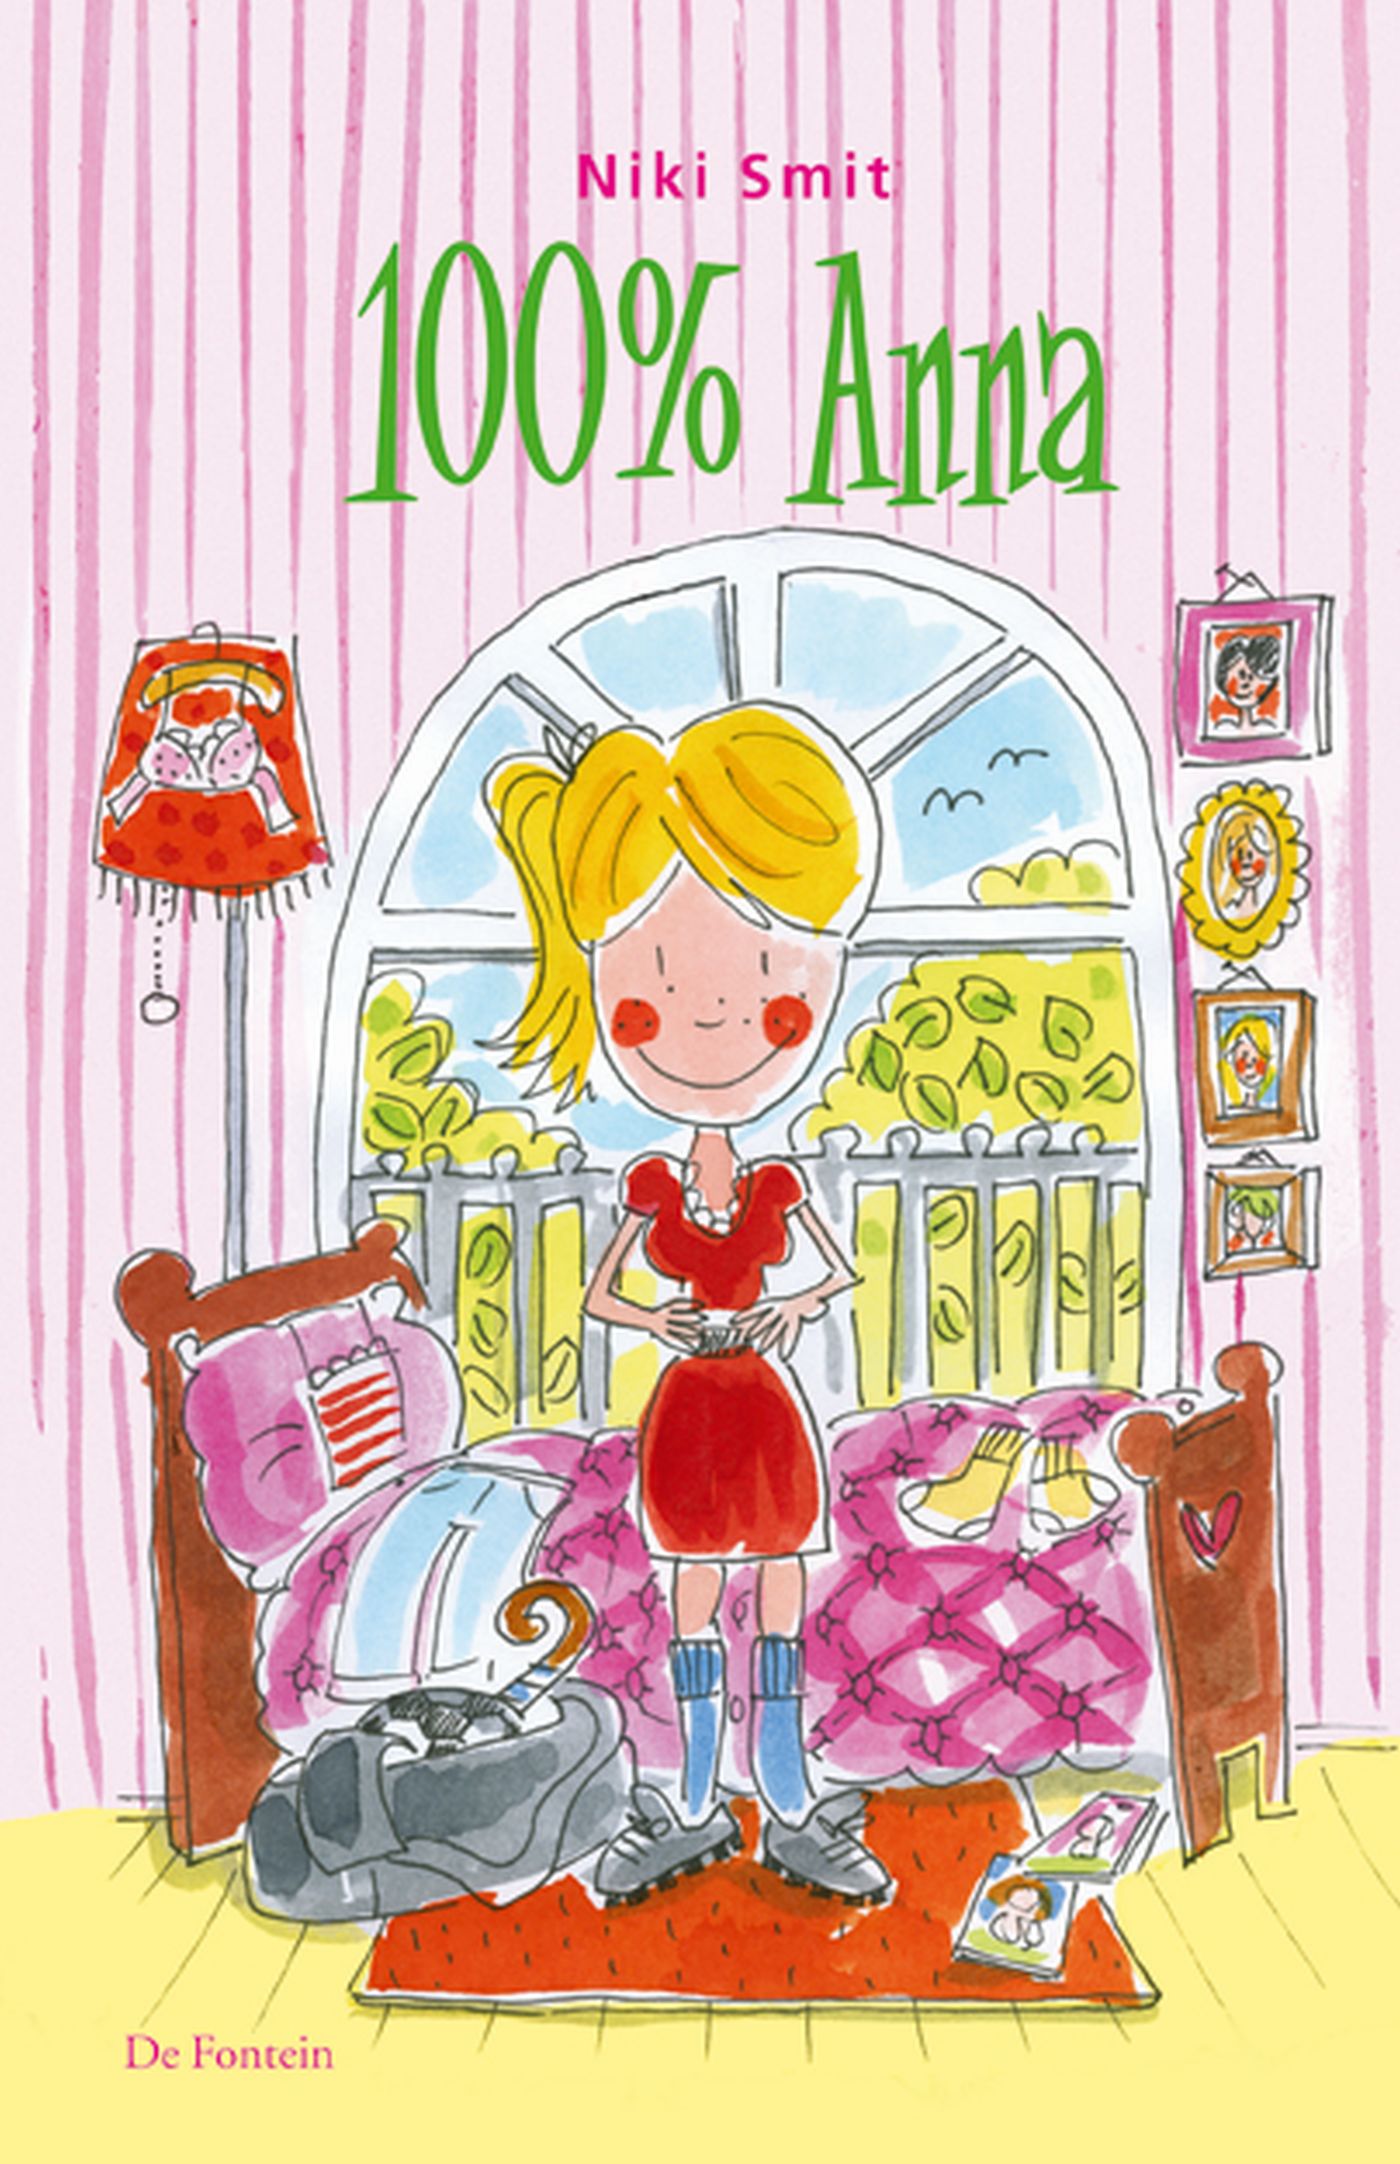 100% Anna